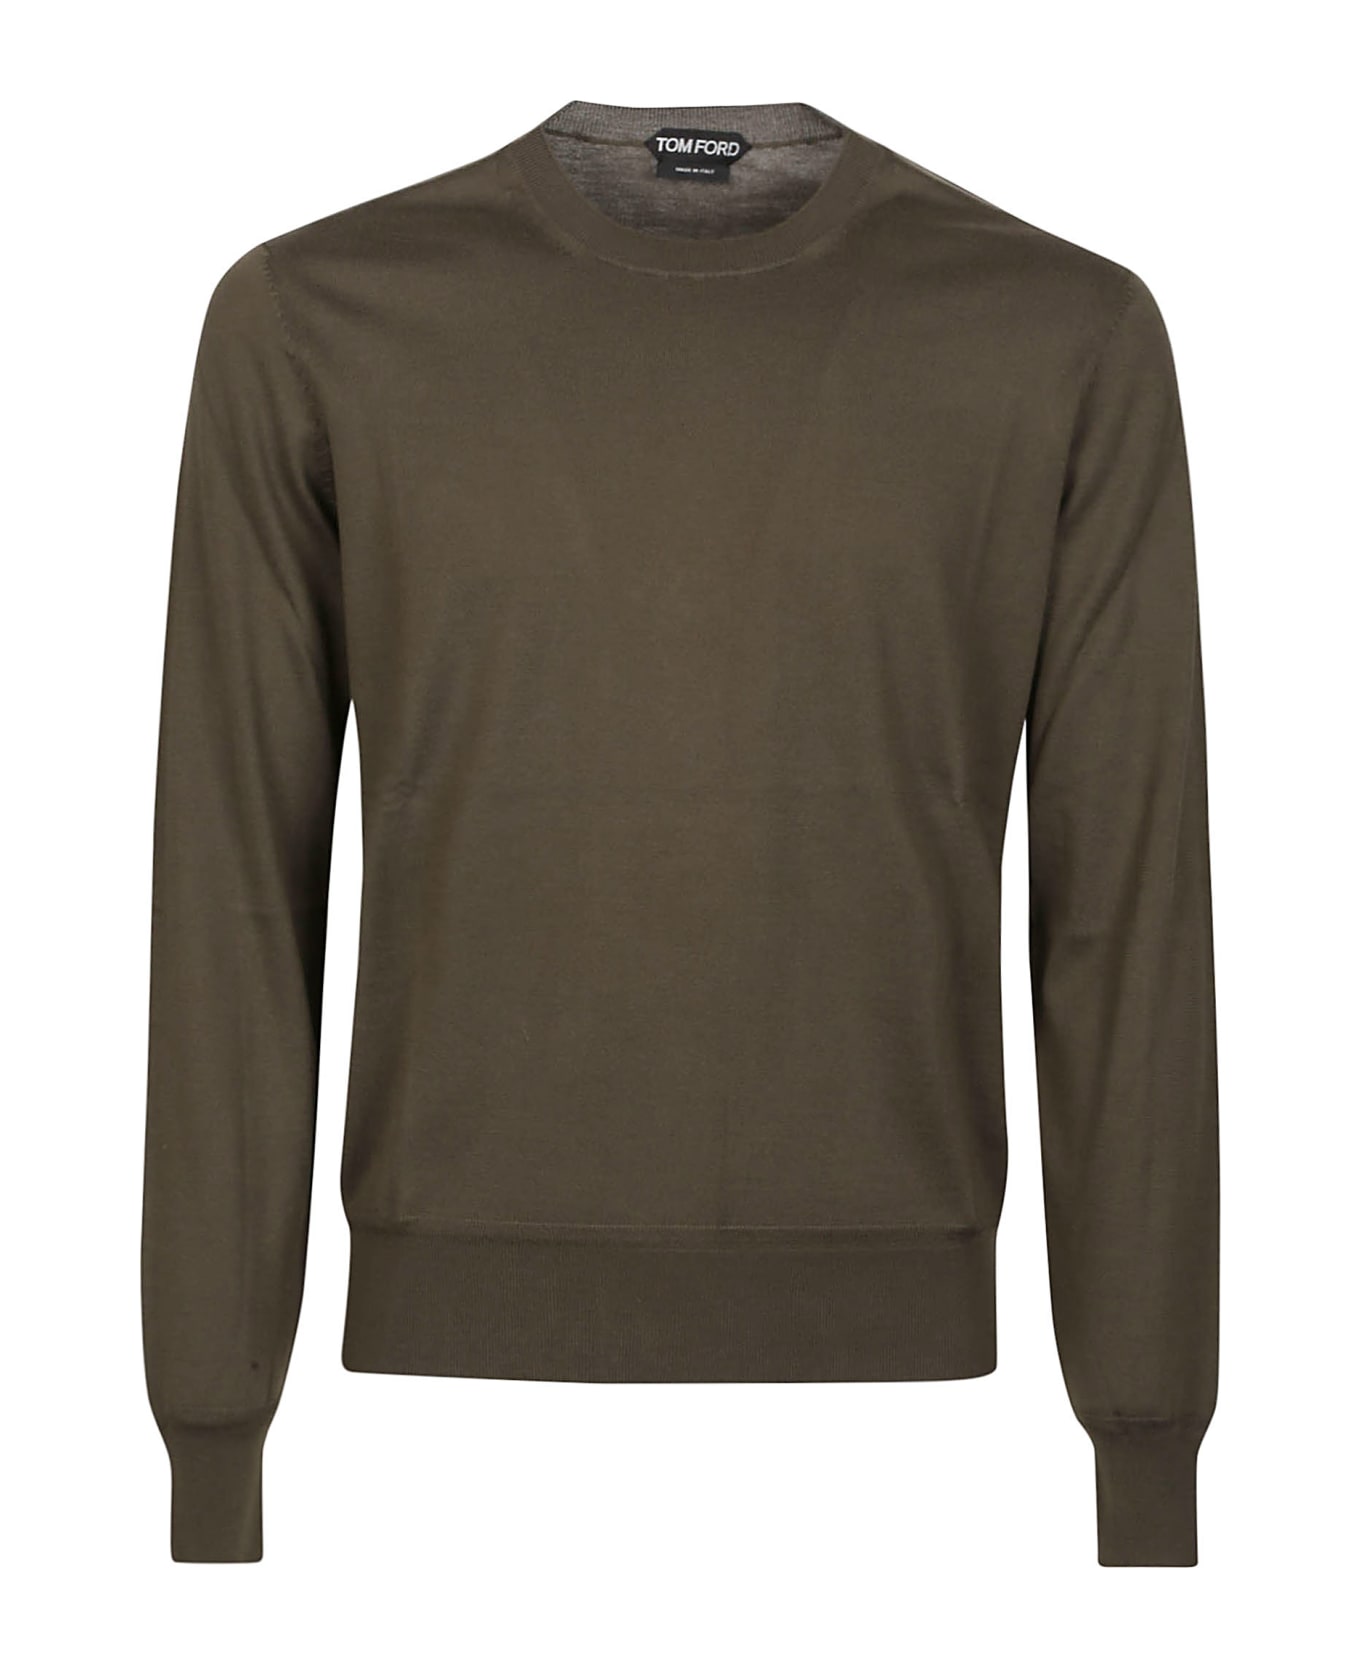 Tom Ford Long Sleeve Sweater - Dark Olive